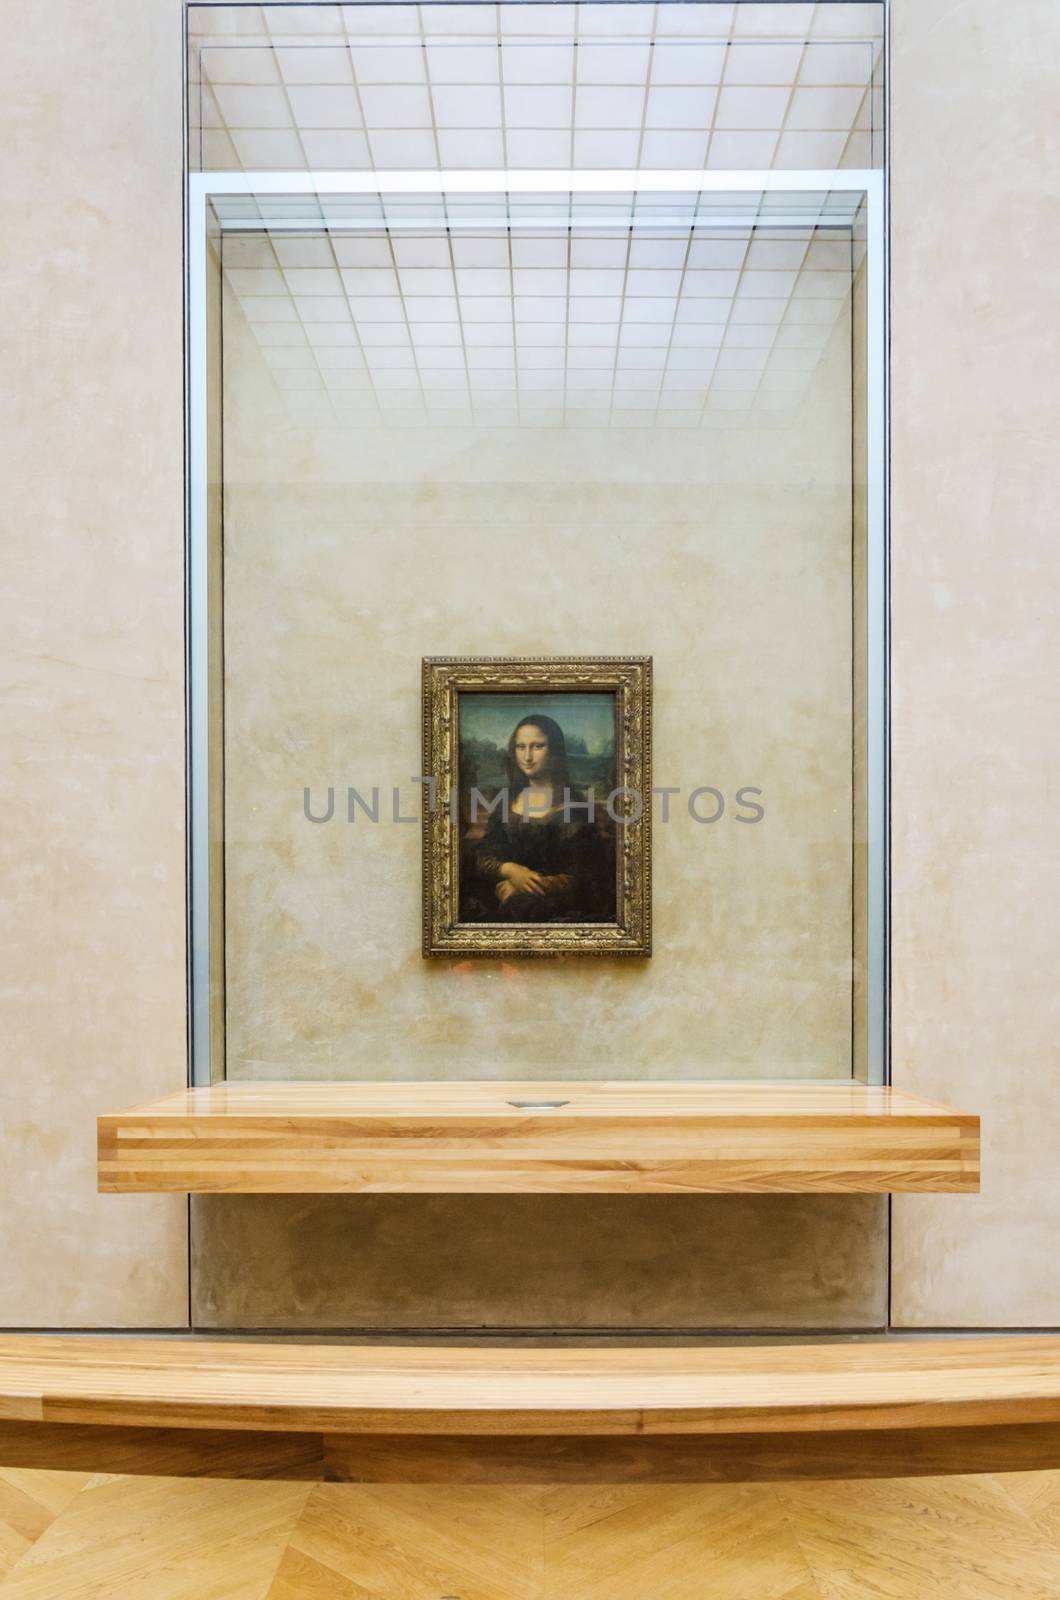 Paris, France - May 13, 2015: Leonardo DaVinci's "Mona Lisa" at the Louvre Museum by siraanamwong